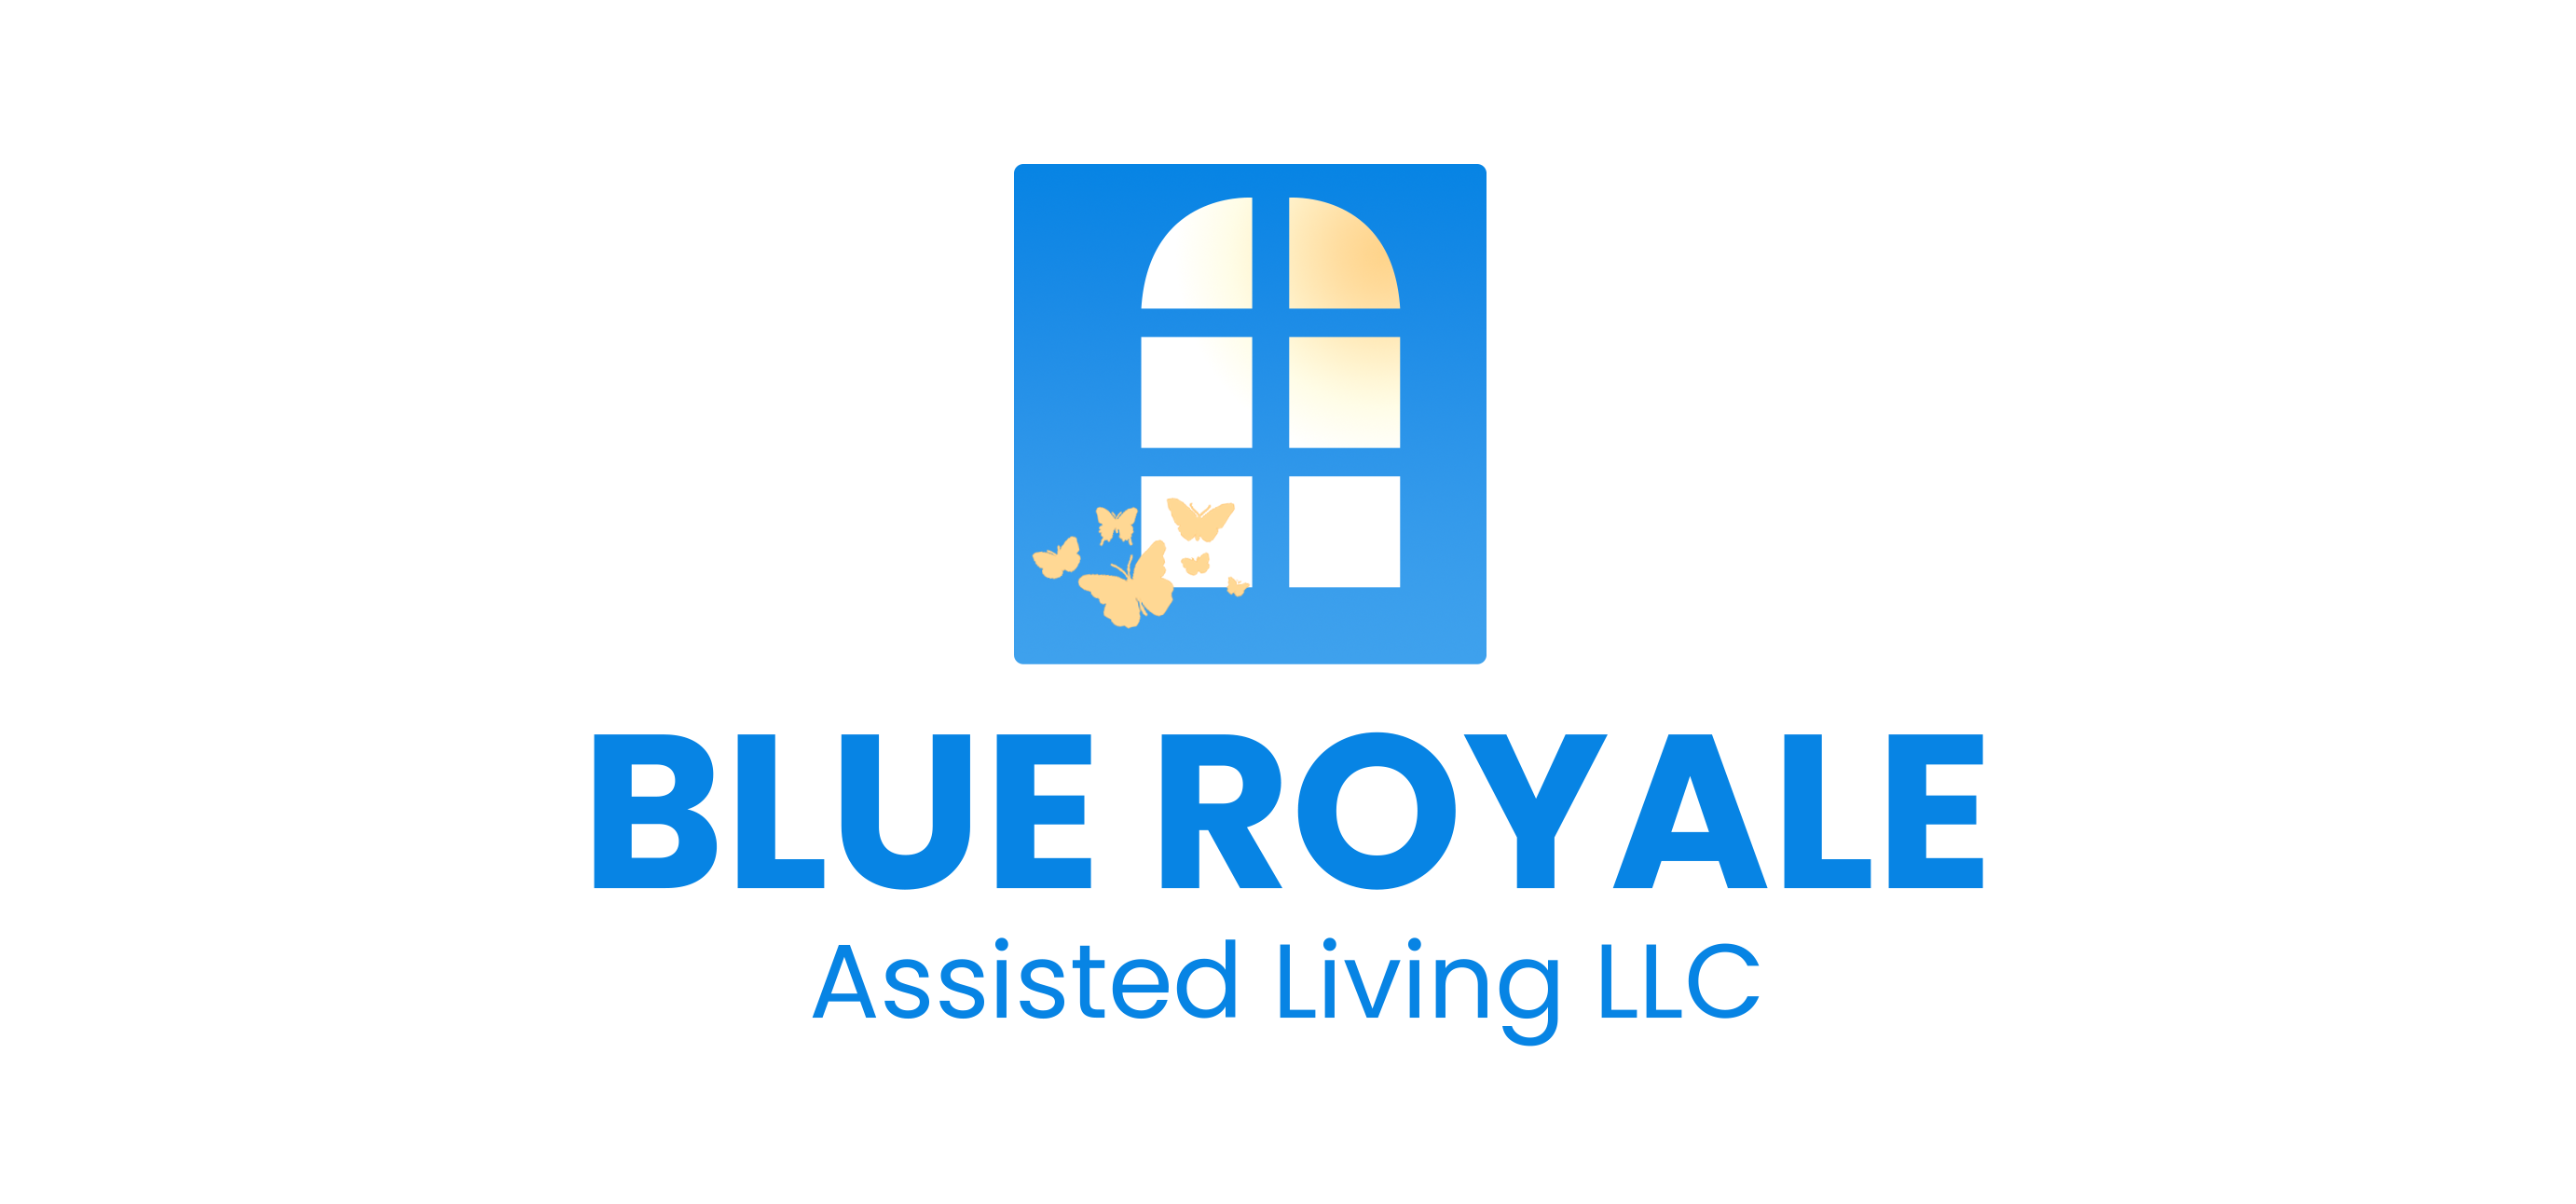 Blue Royale Assisted Living LLC Logo